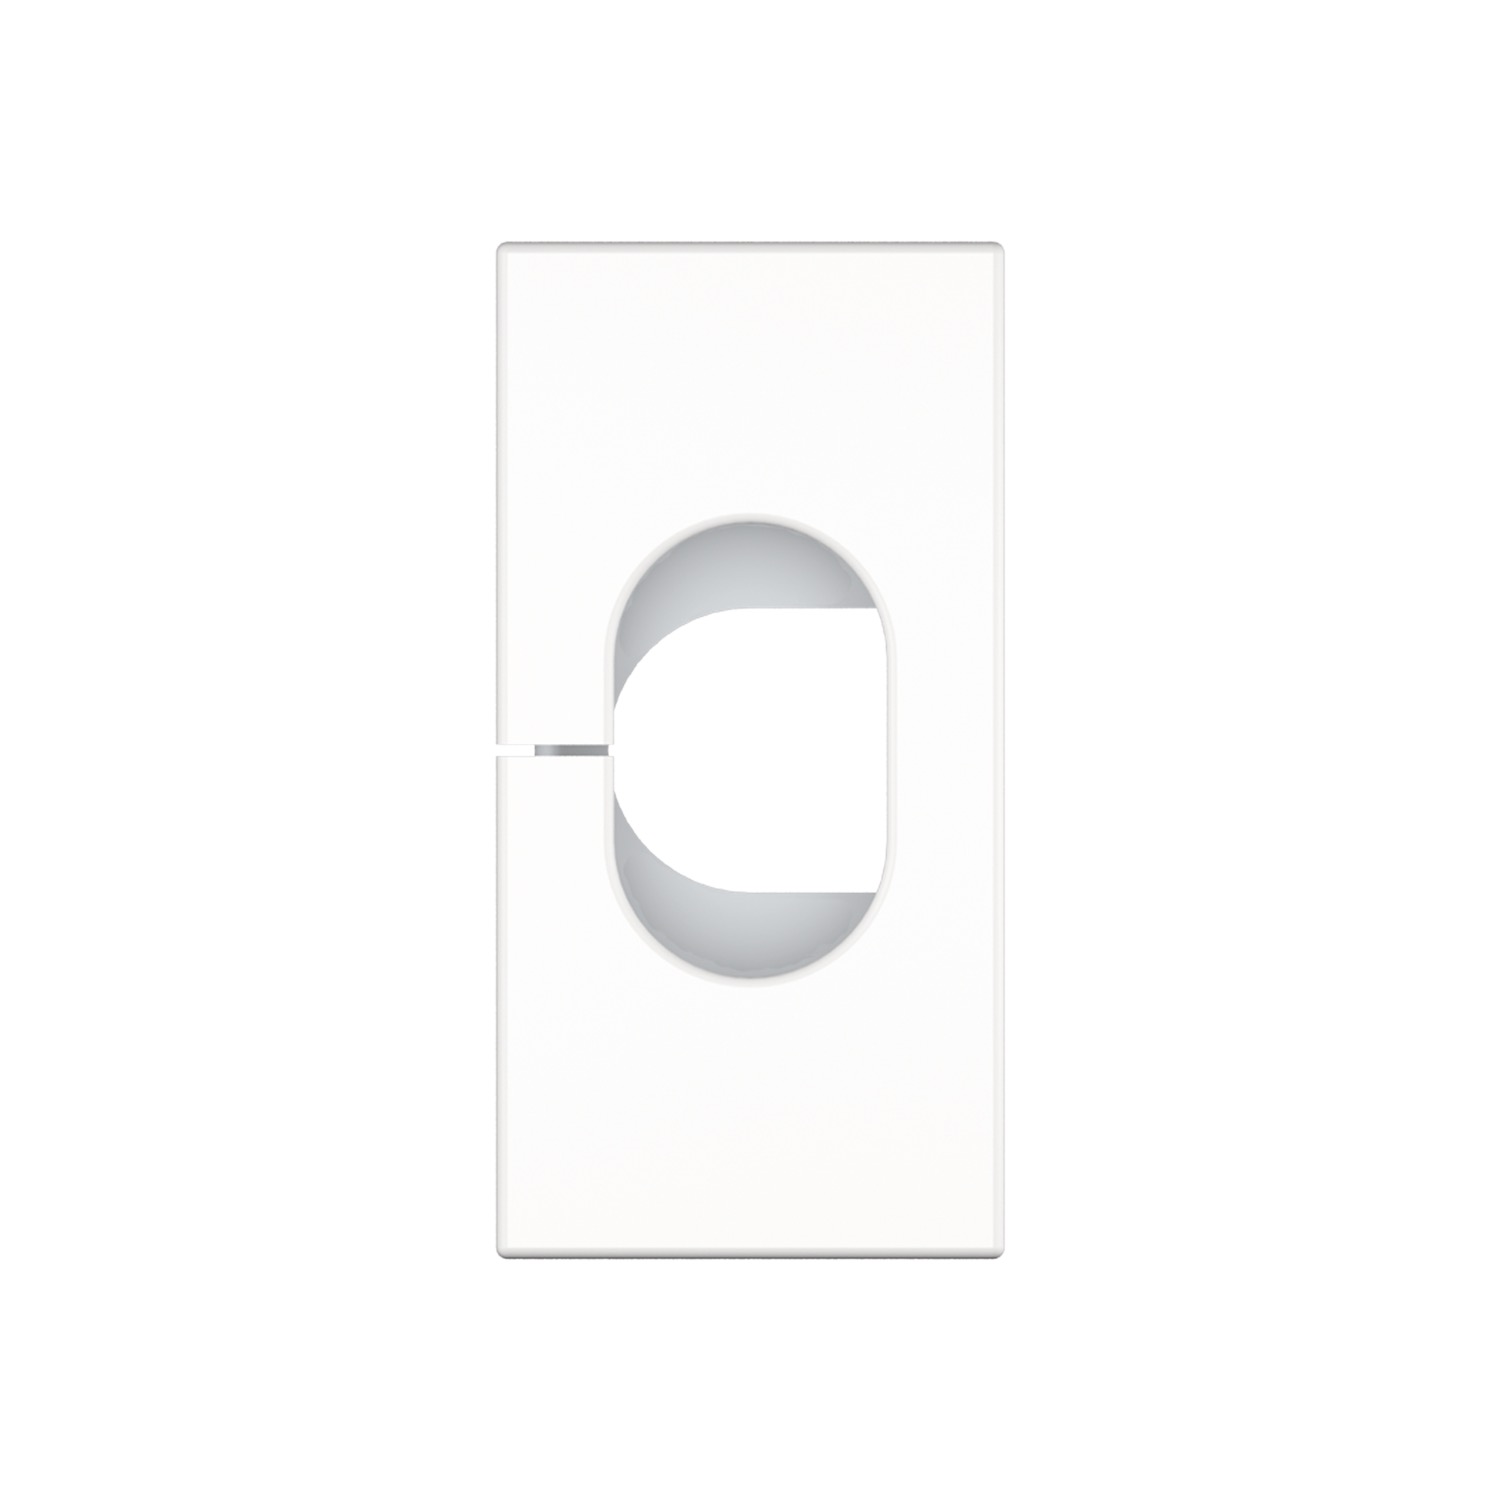 Kindermann Konnect flex 45 click Blindblende - Kabeldurchlass 12 mm - Halbblende - Weiß